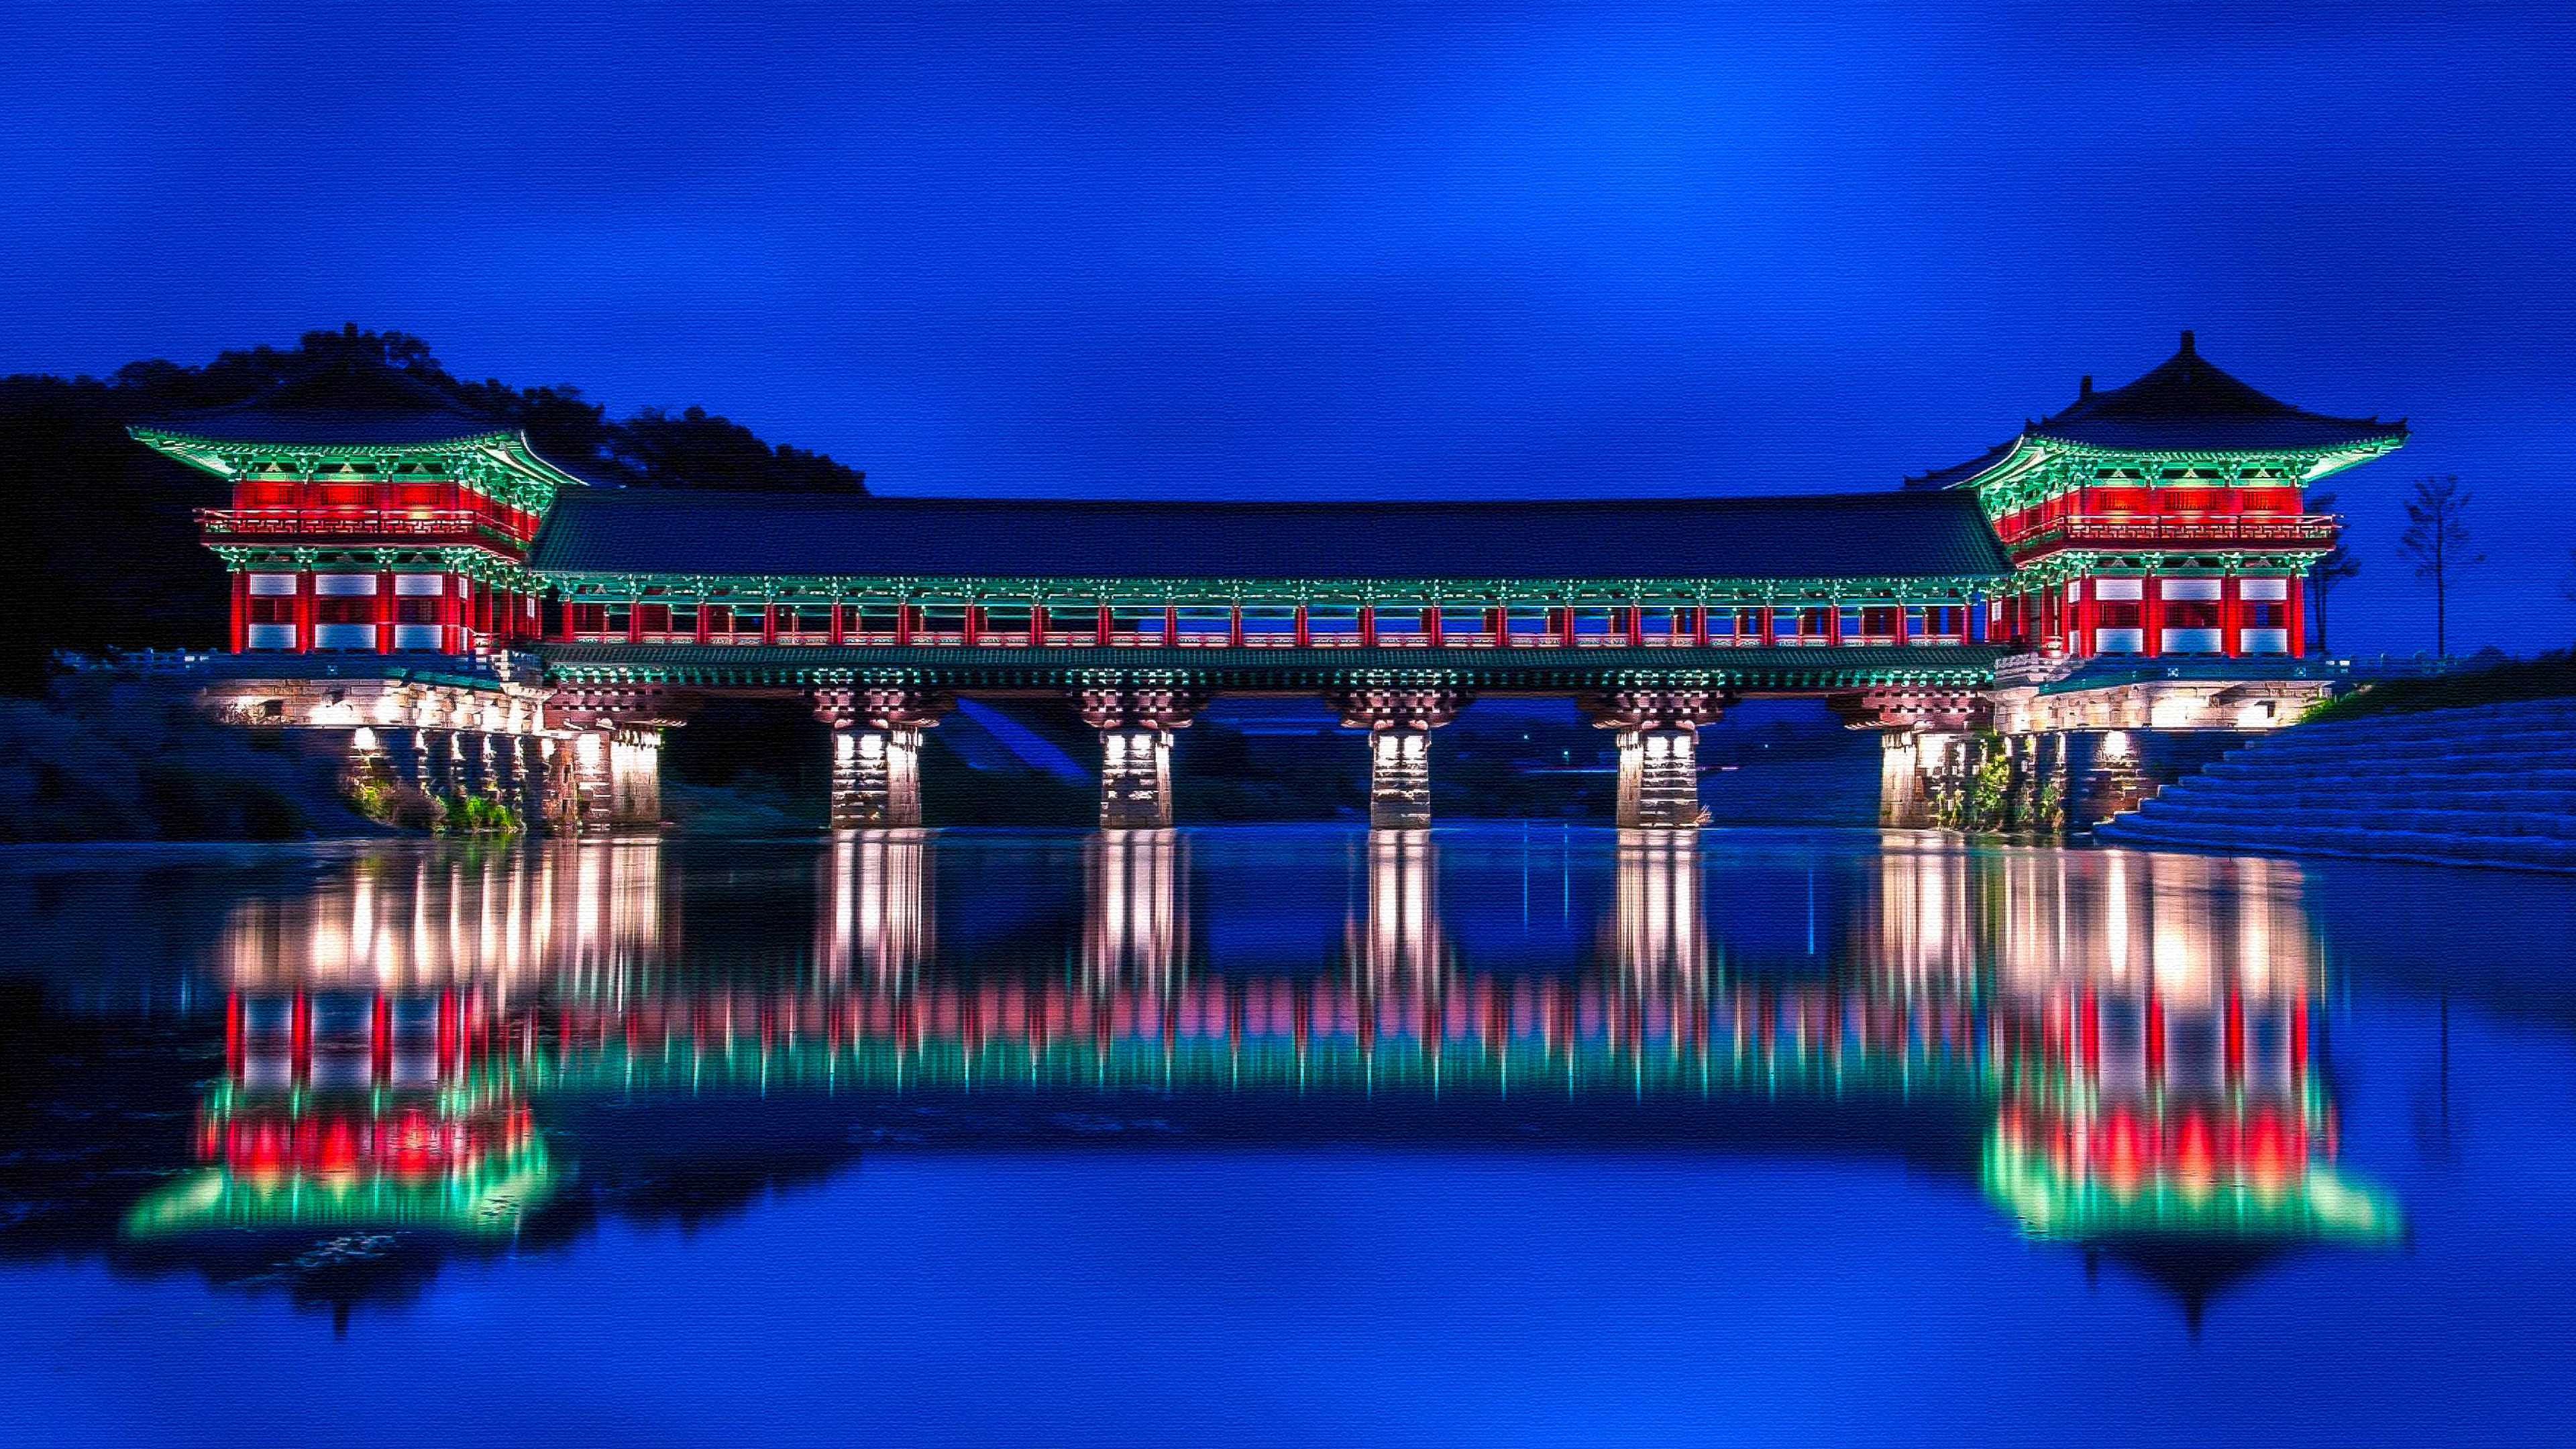 Woljeonggyo Bridge South Korea  Print on Canvas 4k  Ultra 